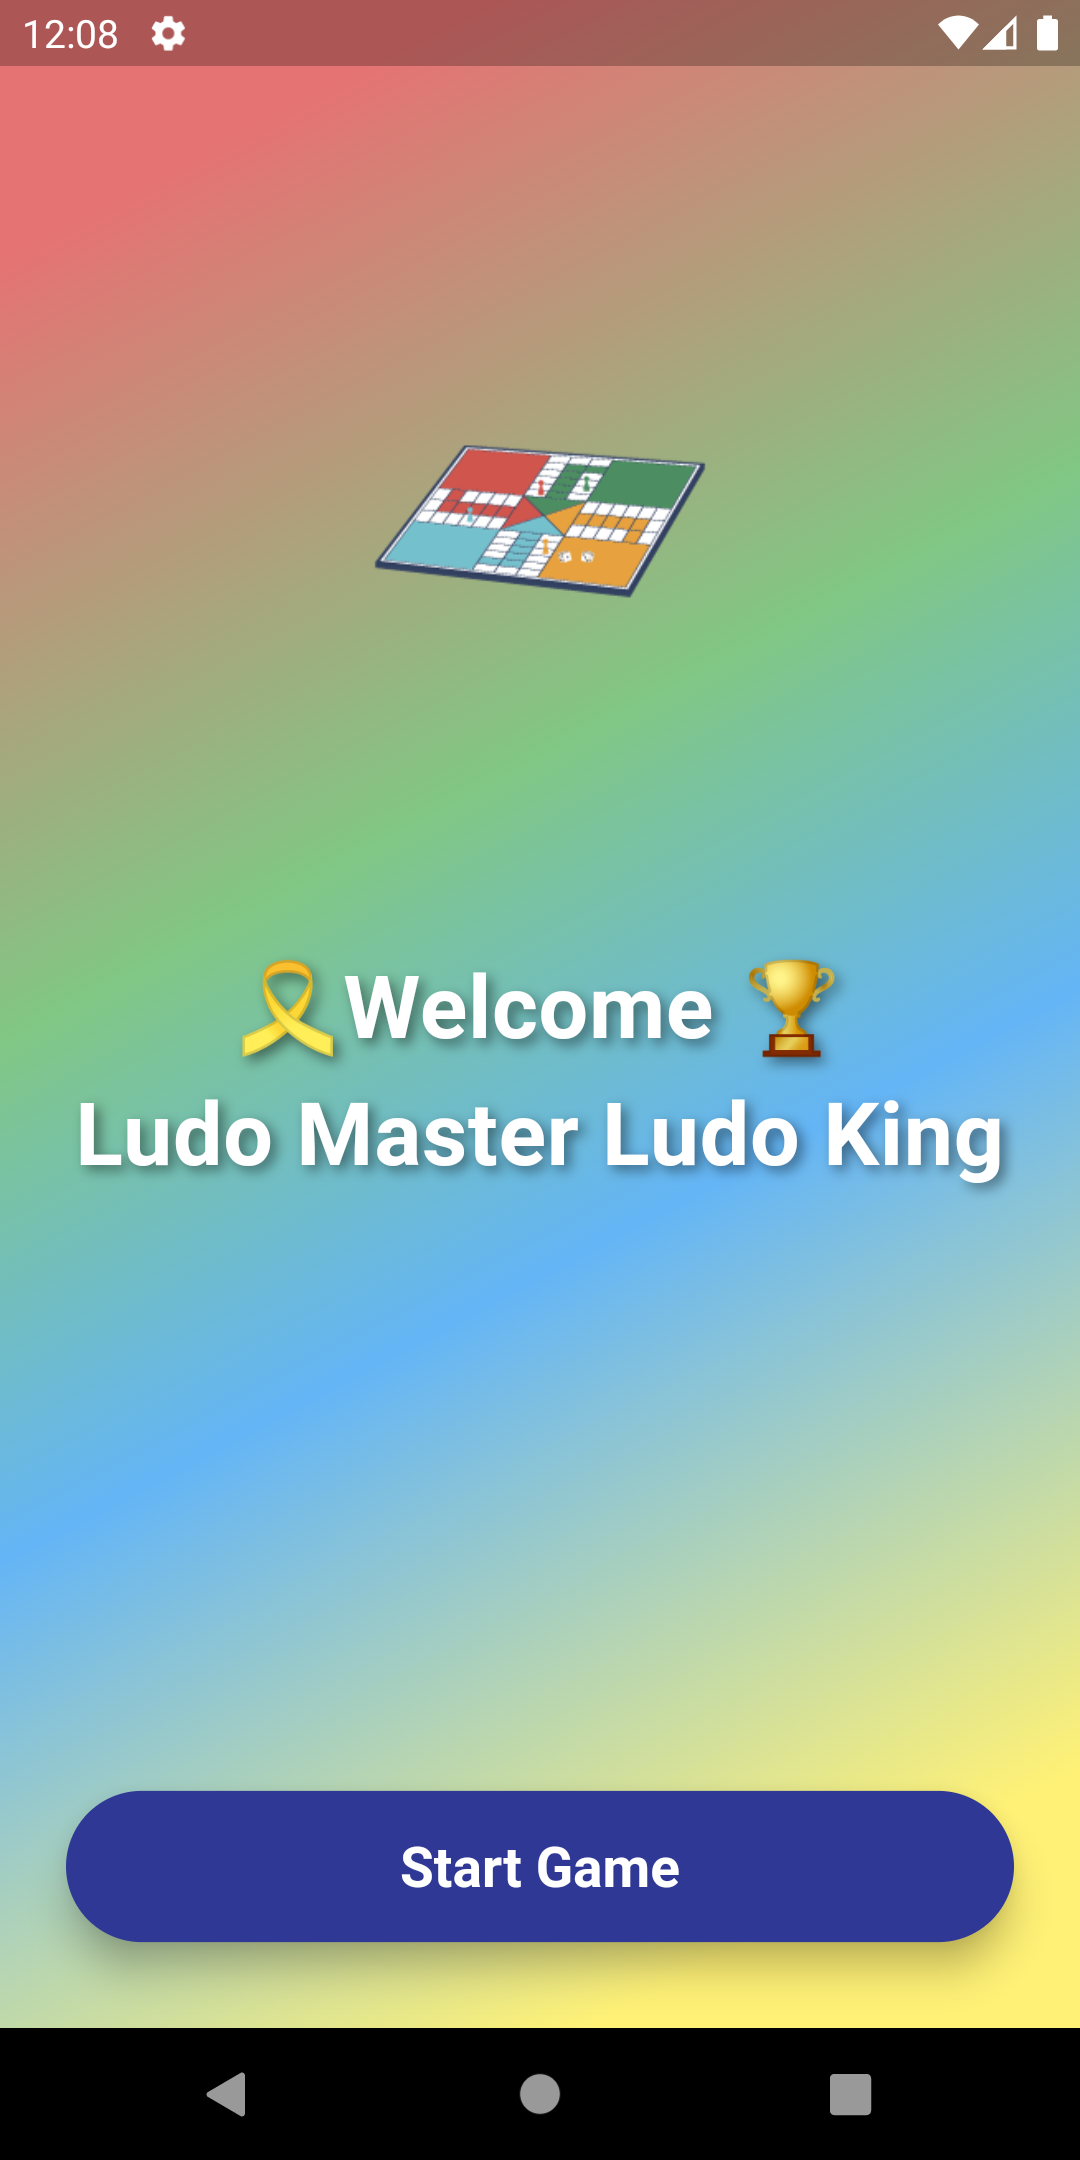 Download do APK de Ludo Master King - Ludo Master Game para Android